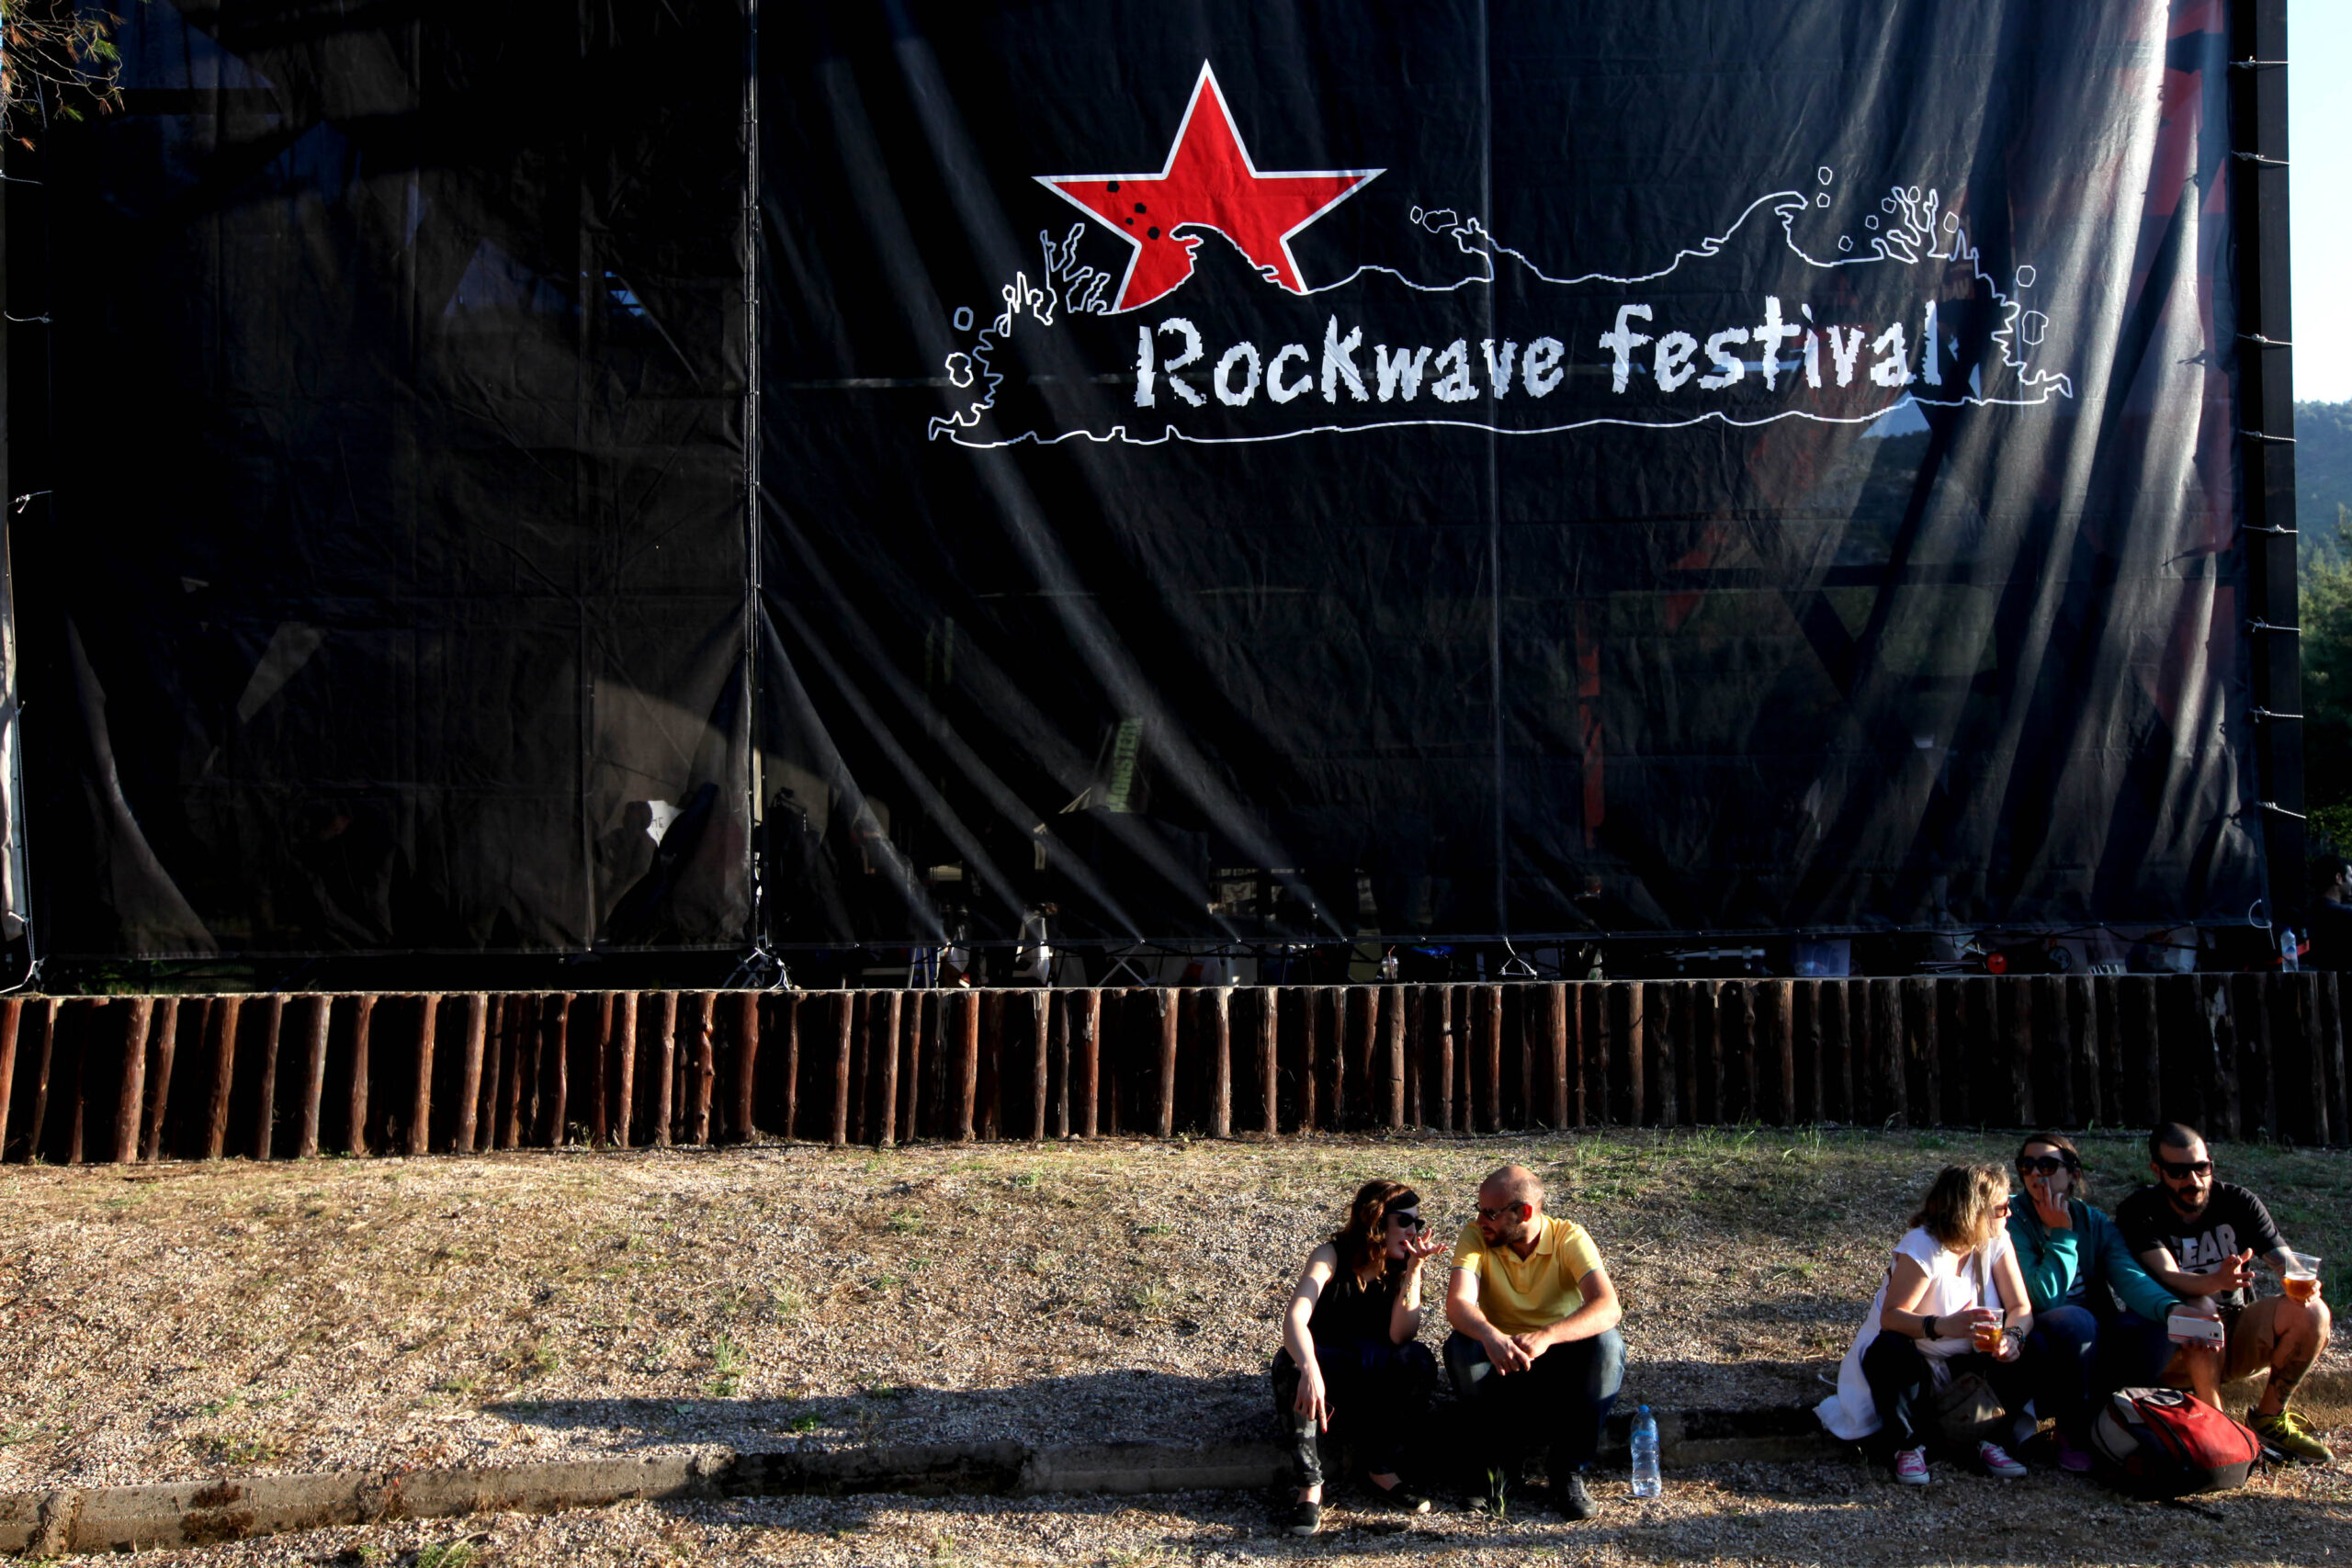 Rockwave Festival